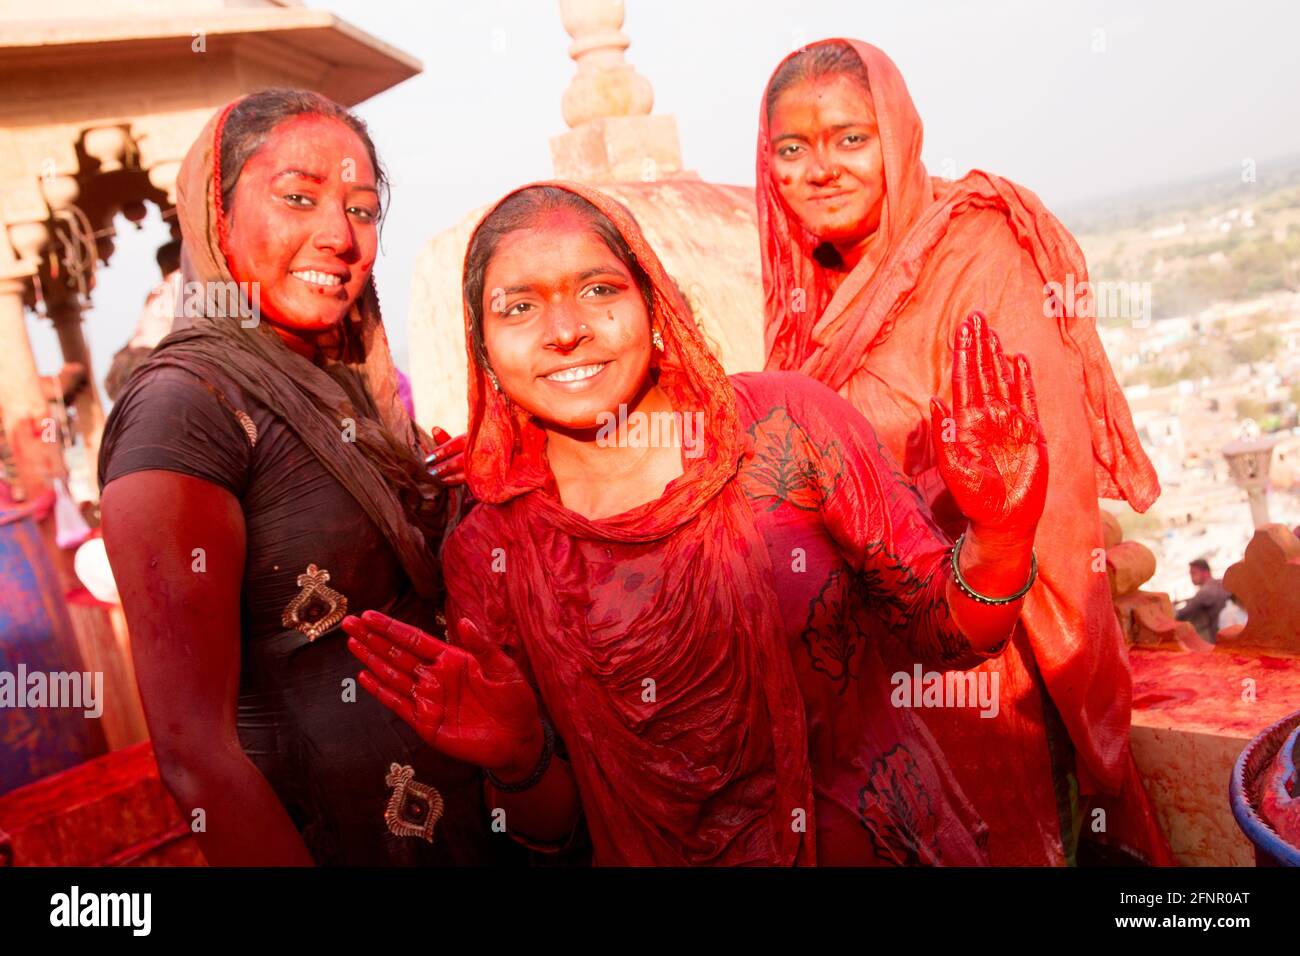 Lathmar Holi Barsana Nandgaon Vrindavan Farbfestivals in ganz Indien Stockfoto